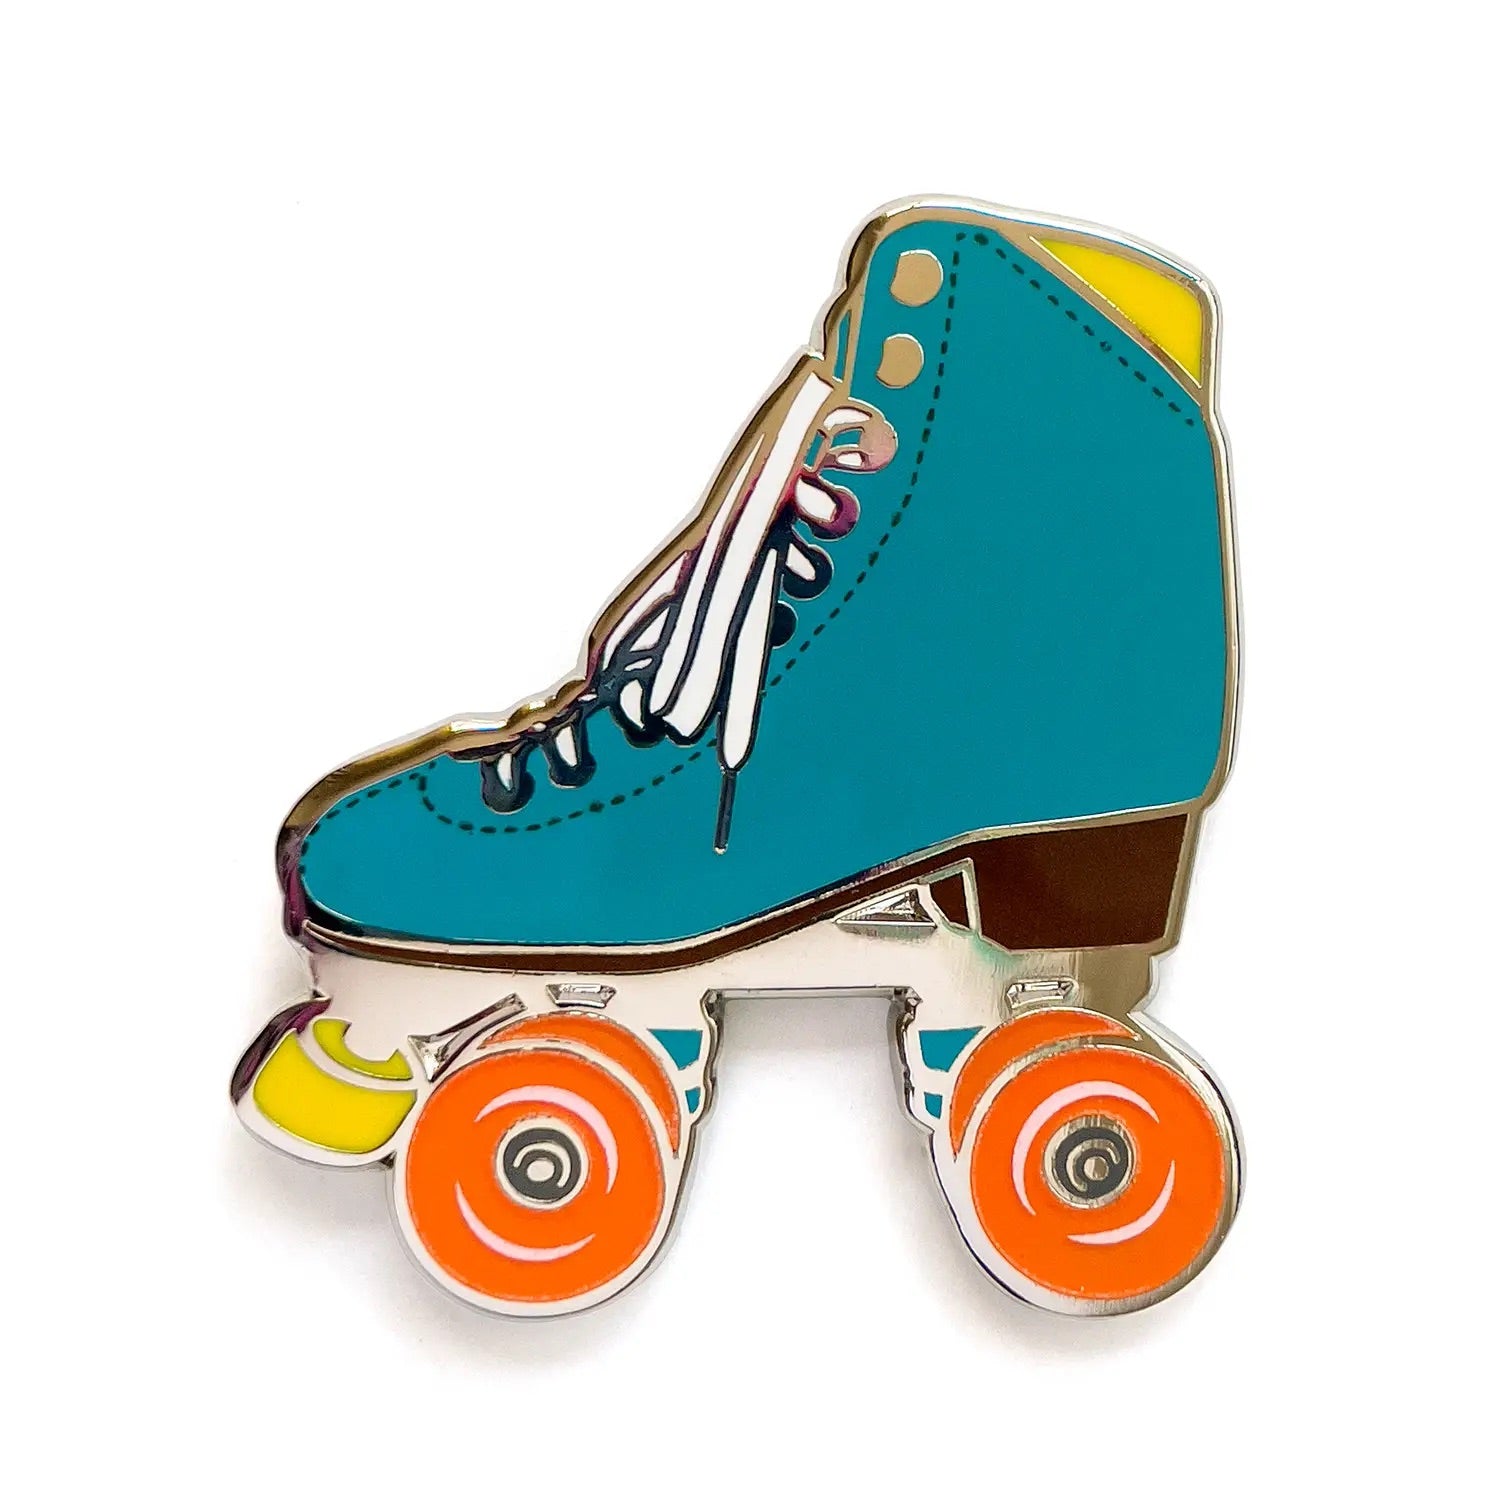 Teal roller skate pin with orange glow-in-the-dark wheels